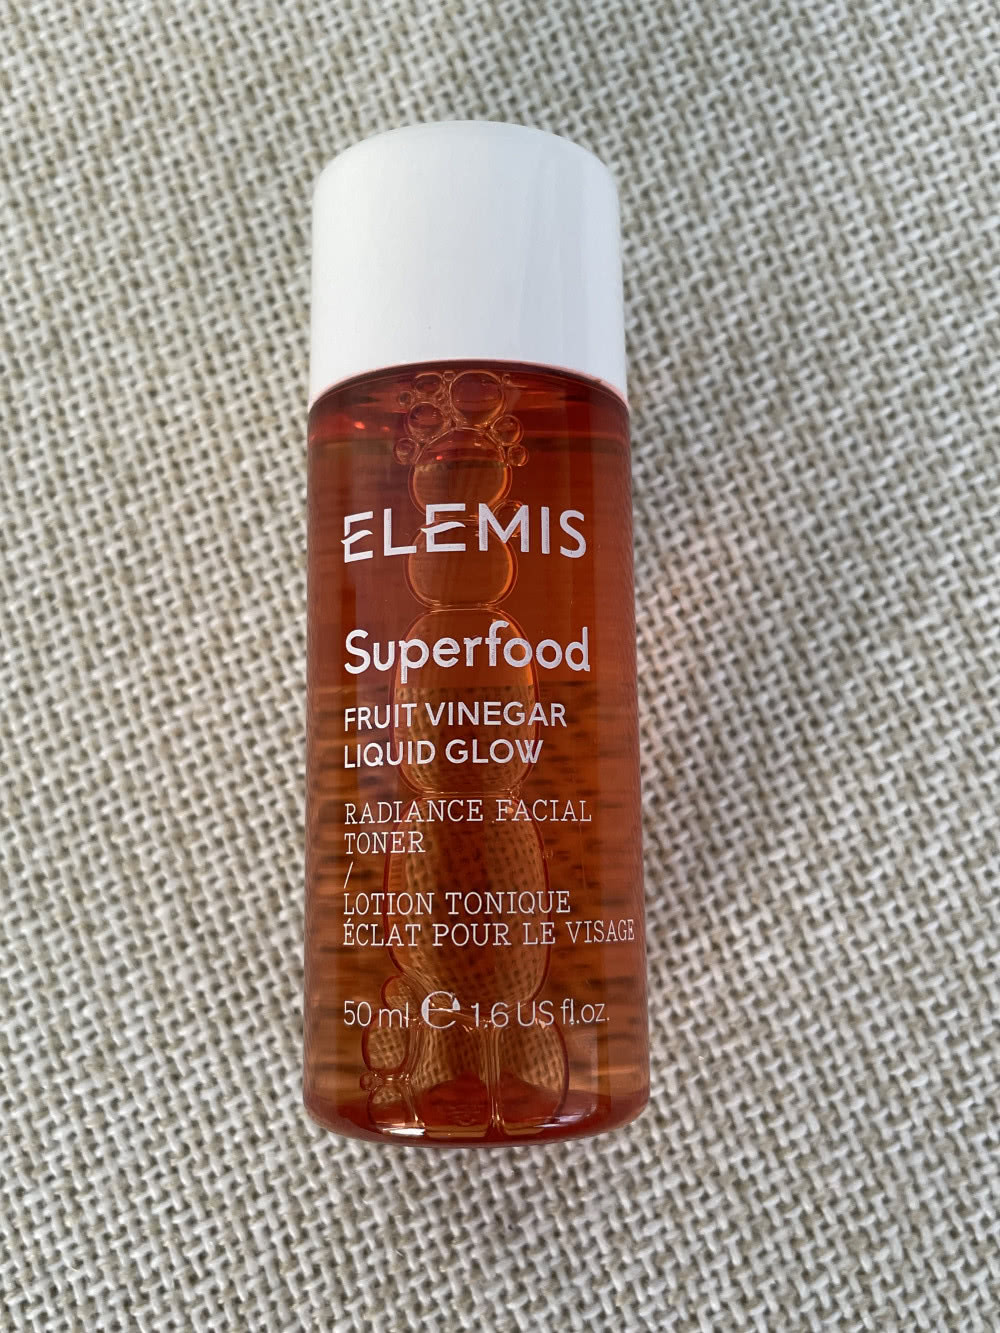 Elemis Superfood Fruit Vinegar Liquid Glow Фруктовый лосьон для лица